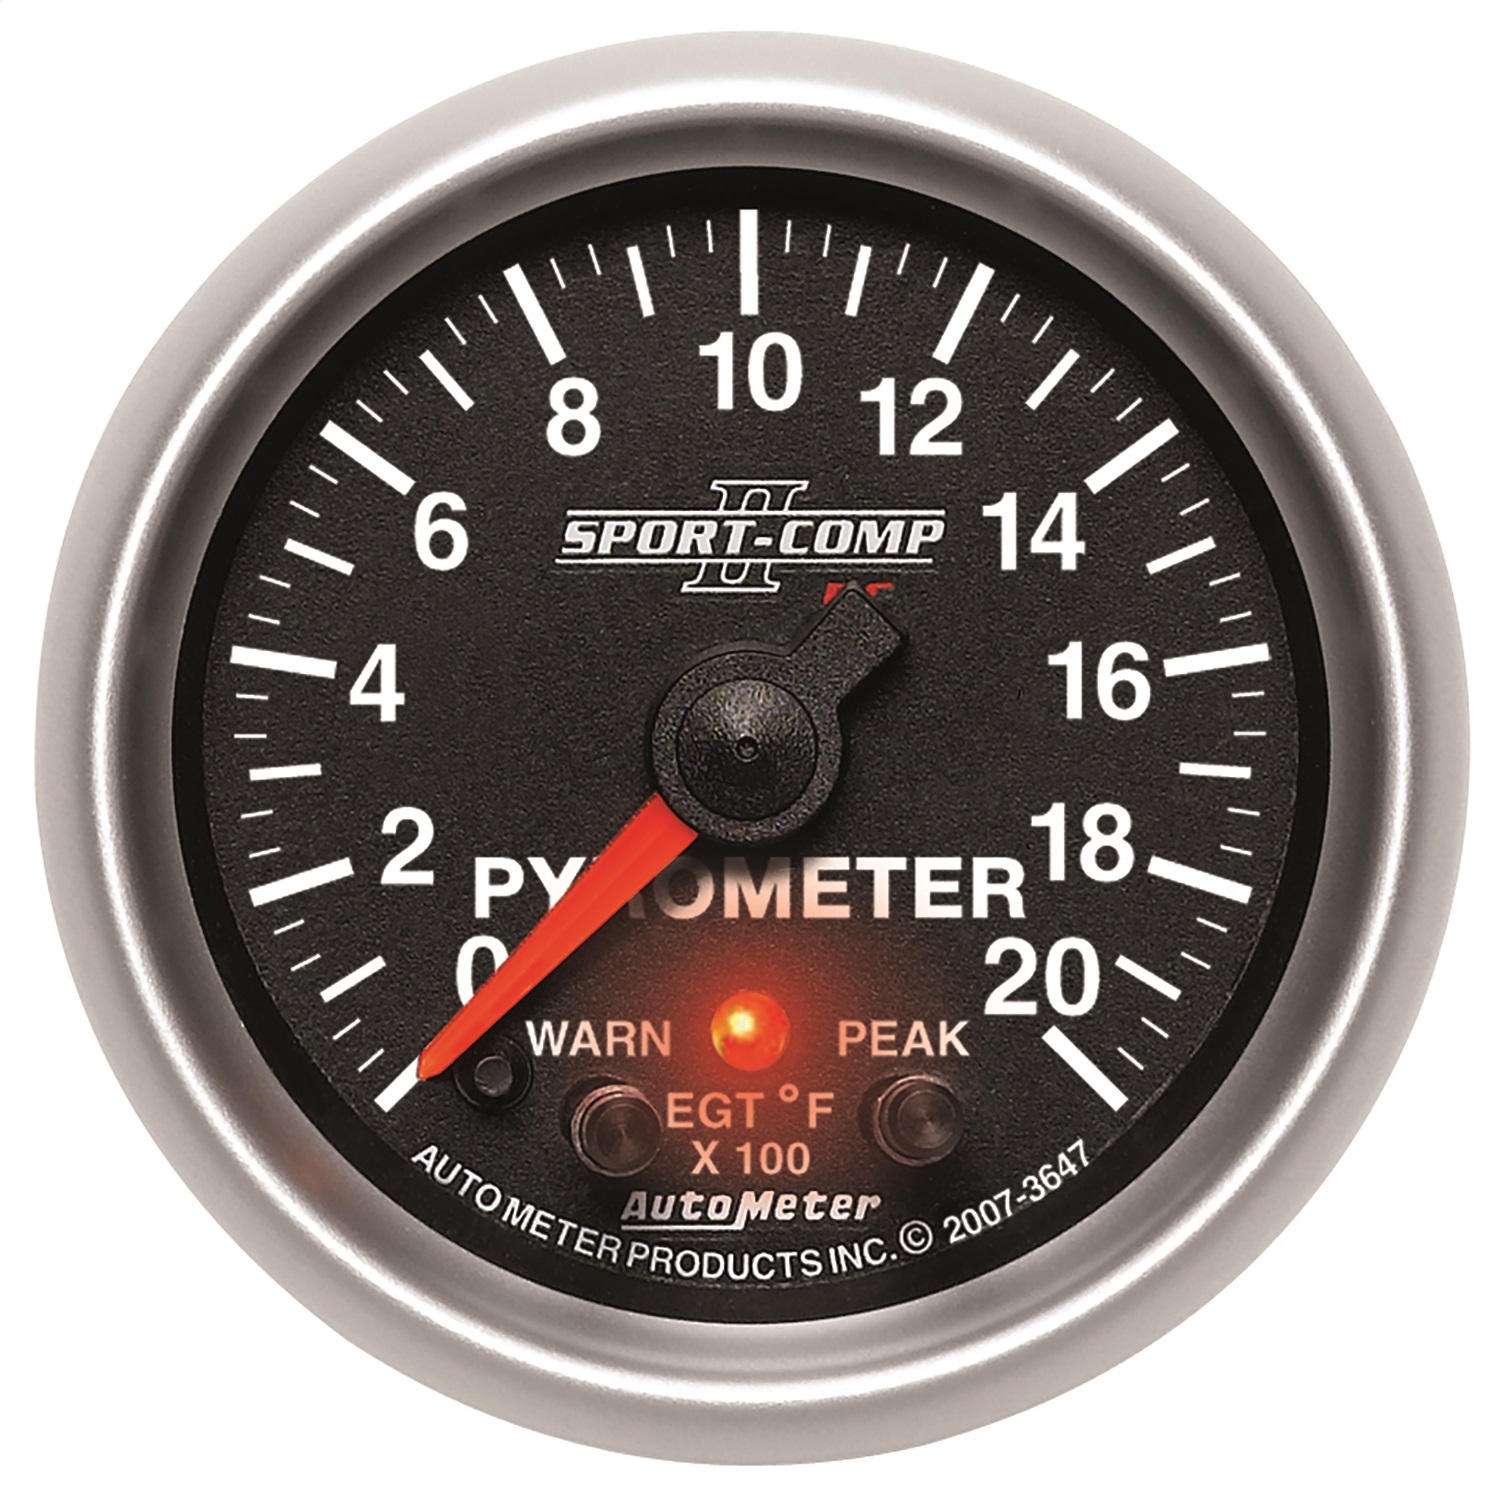 Auto Meter Auto Meter 3647 Sport-Comp PC; Pyrometer Gauge